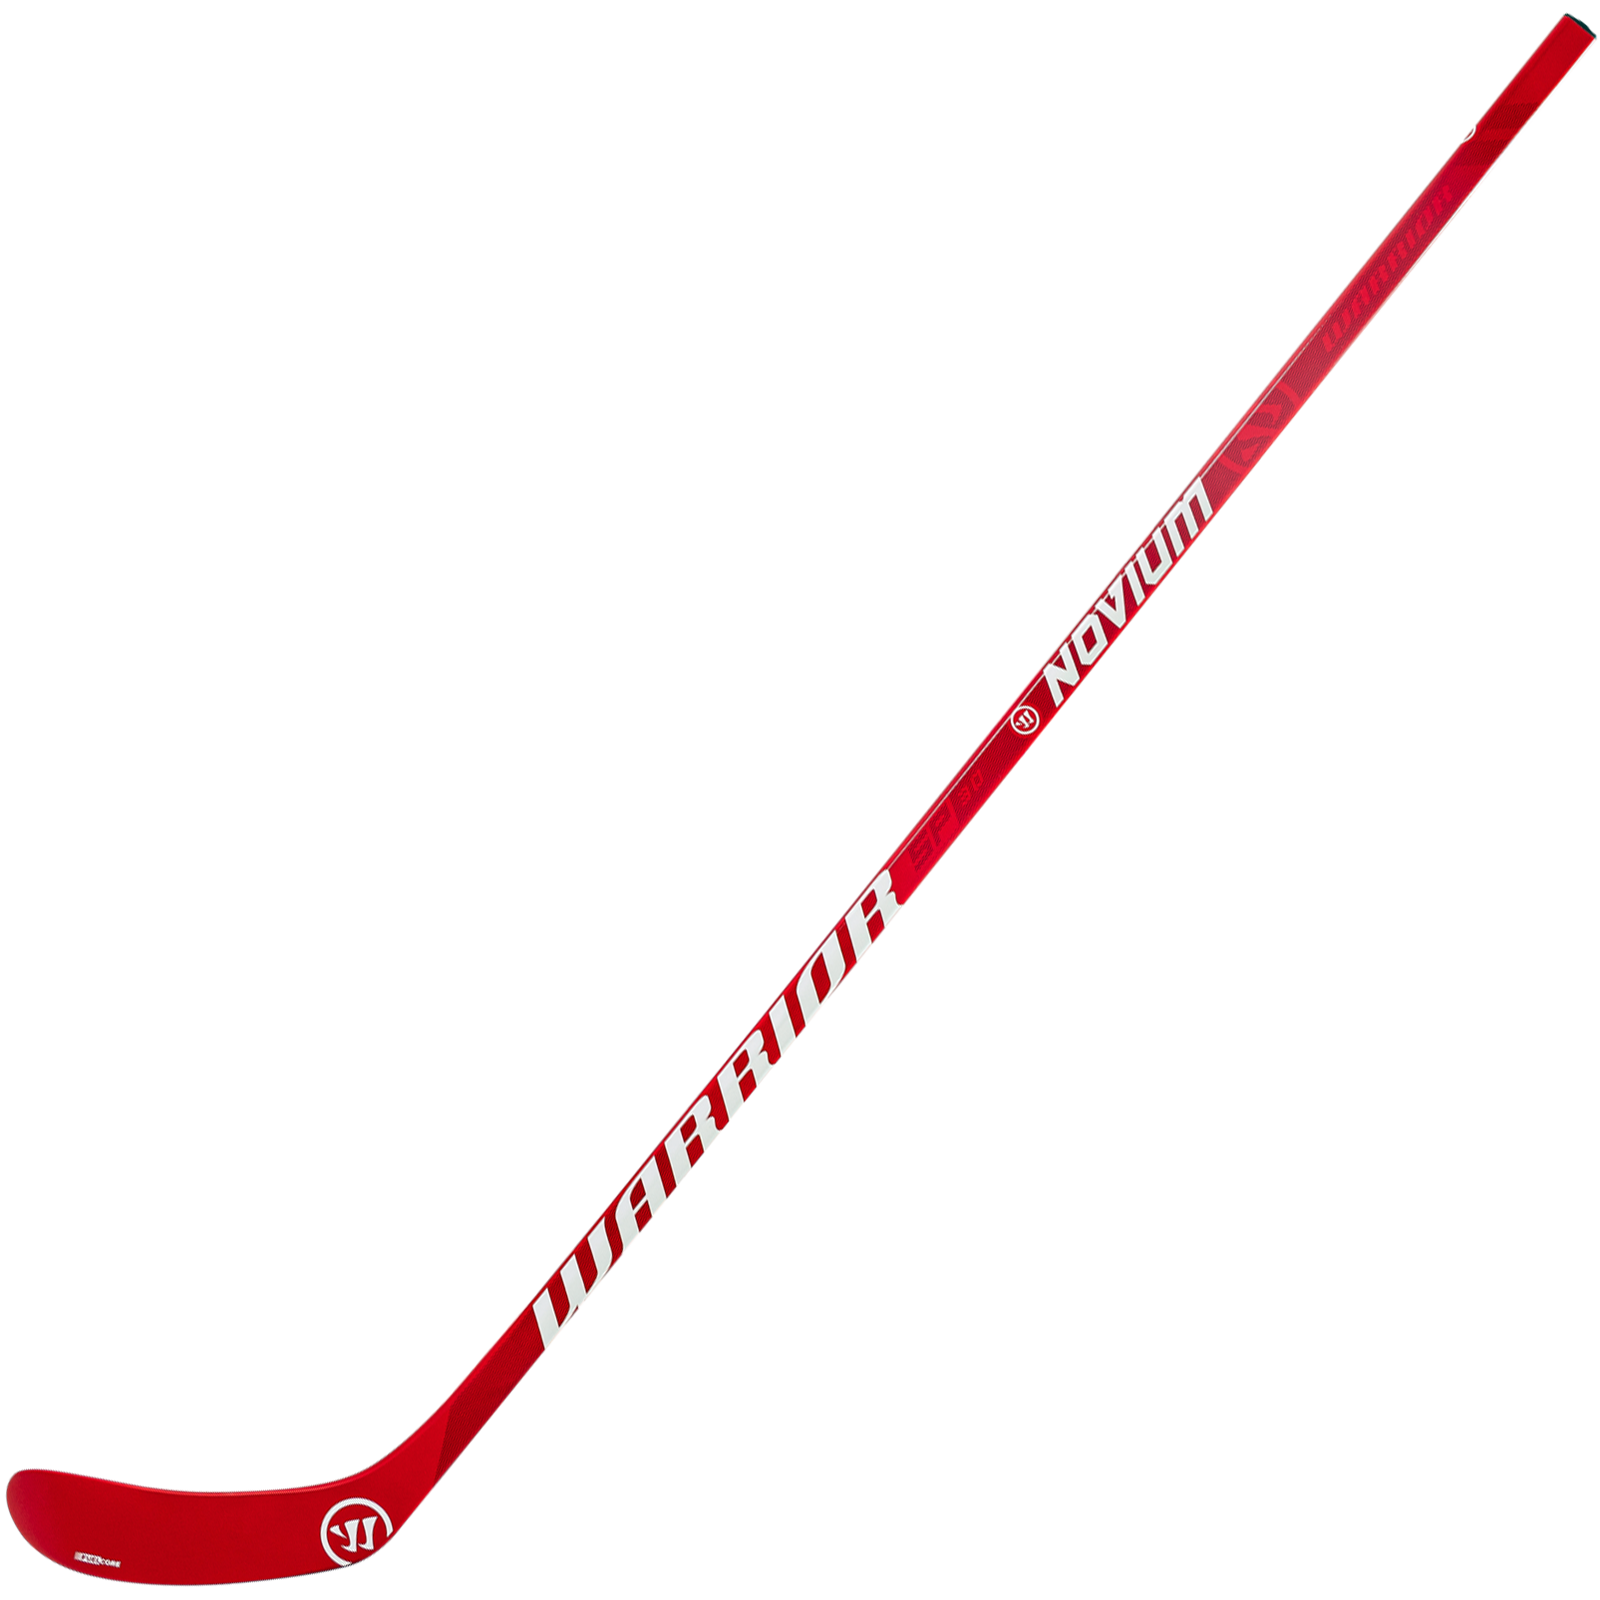 Warrior Novium SP bâton de hockey junior